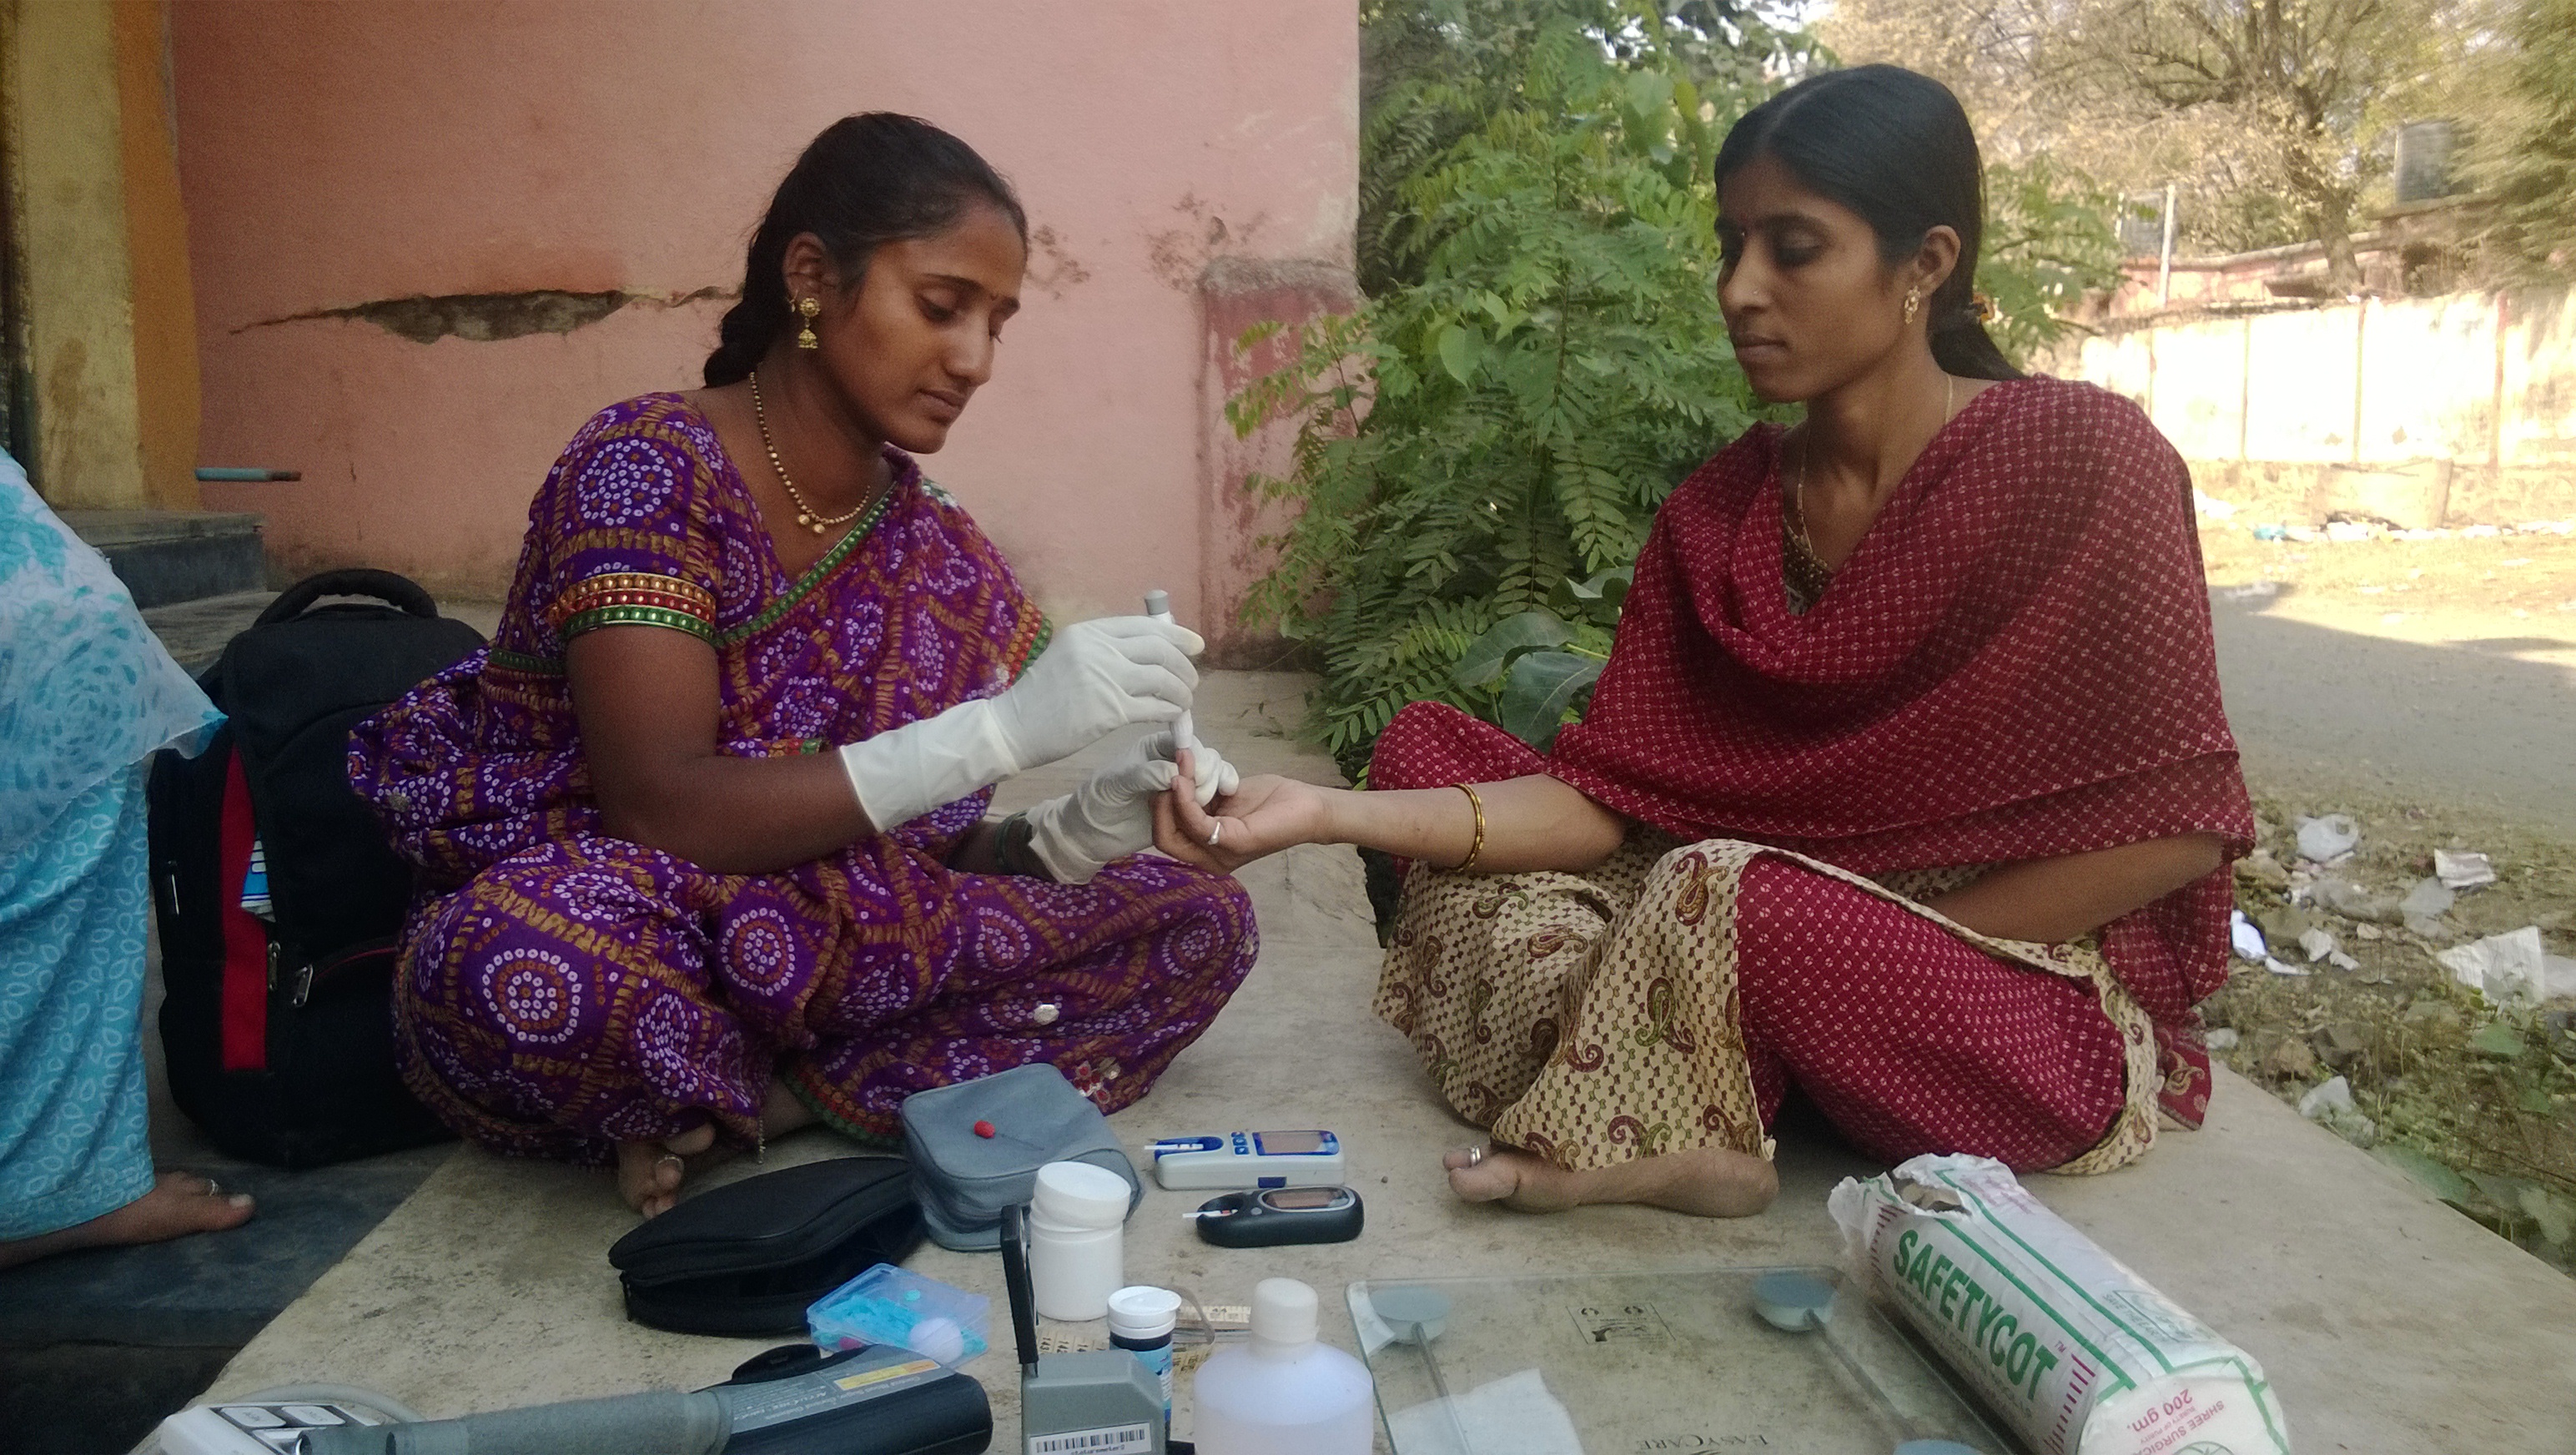 The sakhis visit door to door, conducting tests and enabling rural women to become healthier.